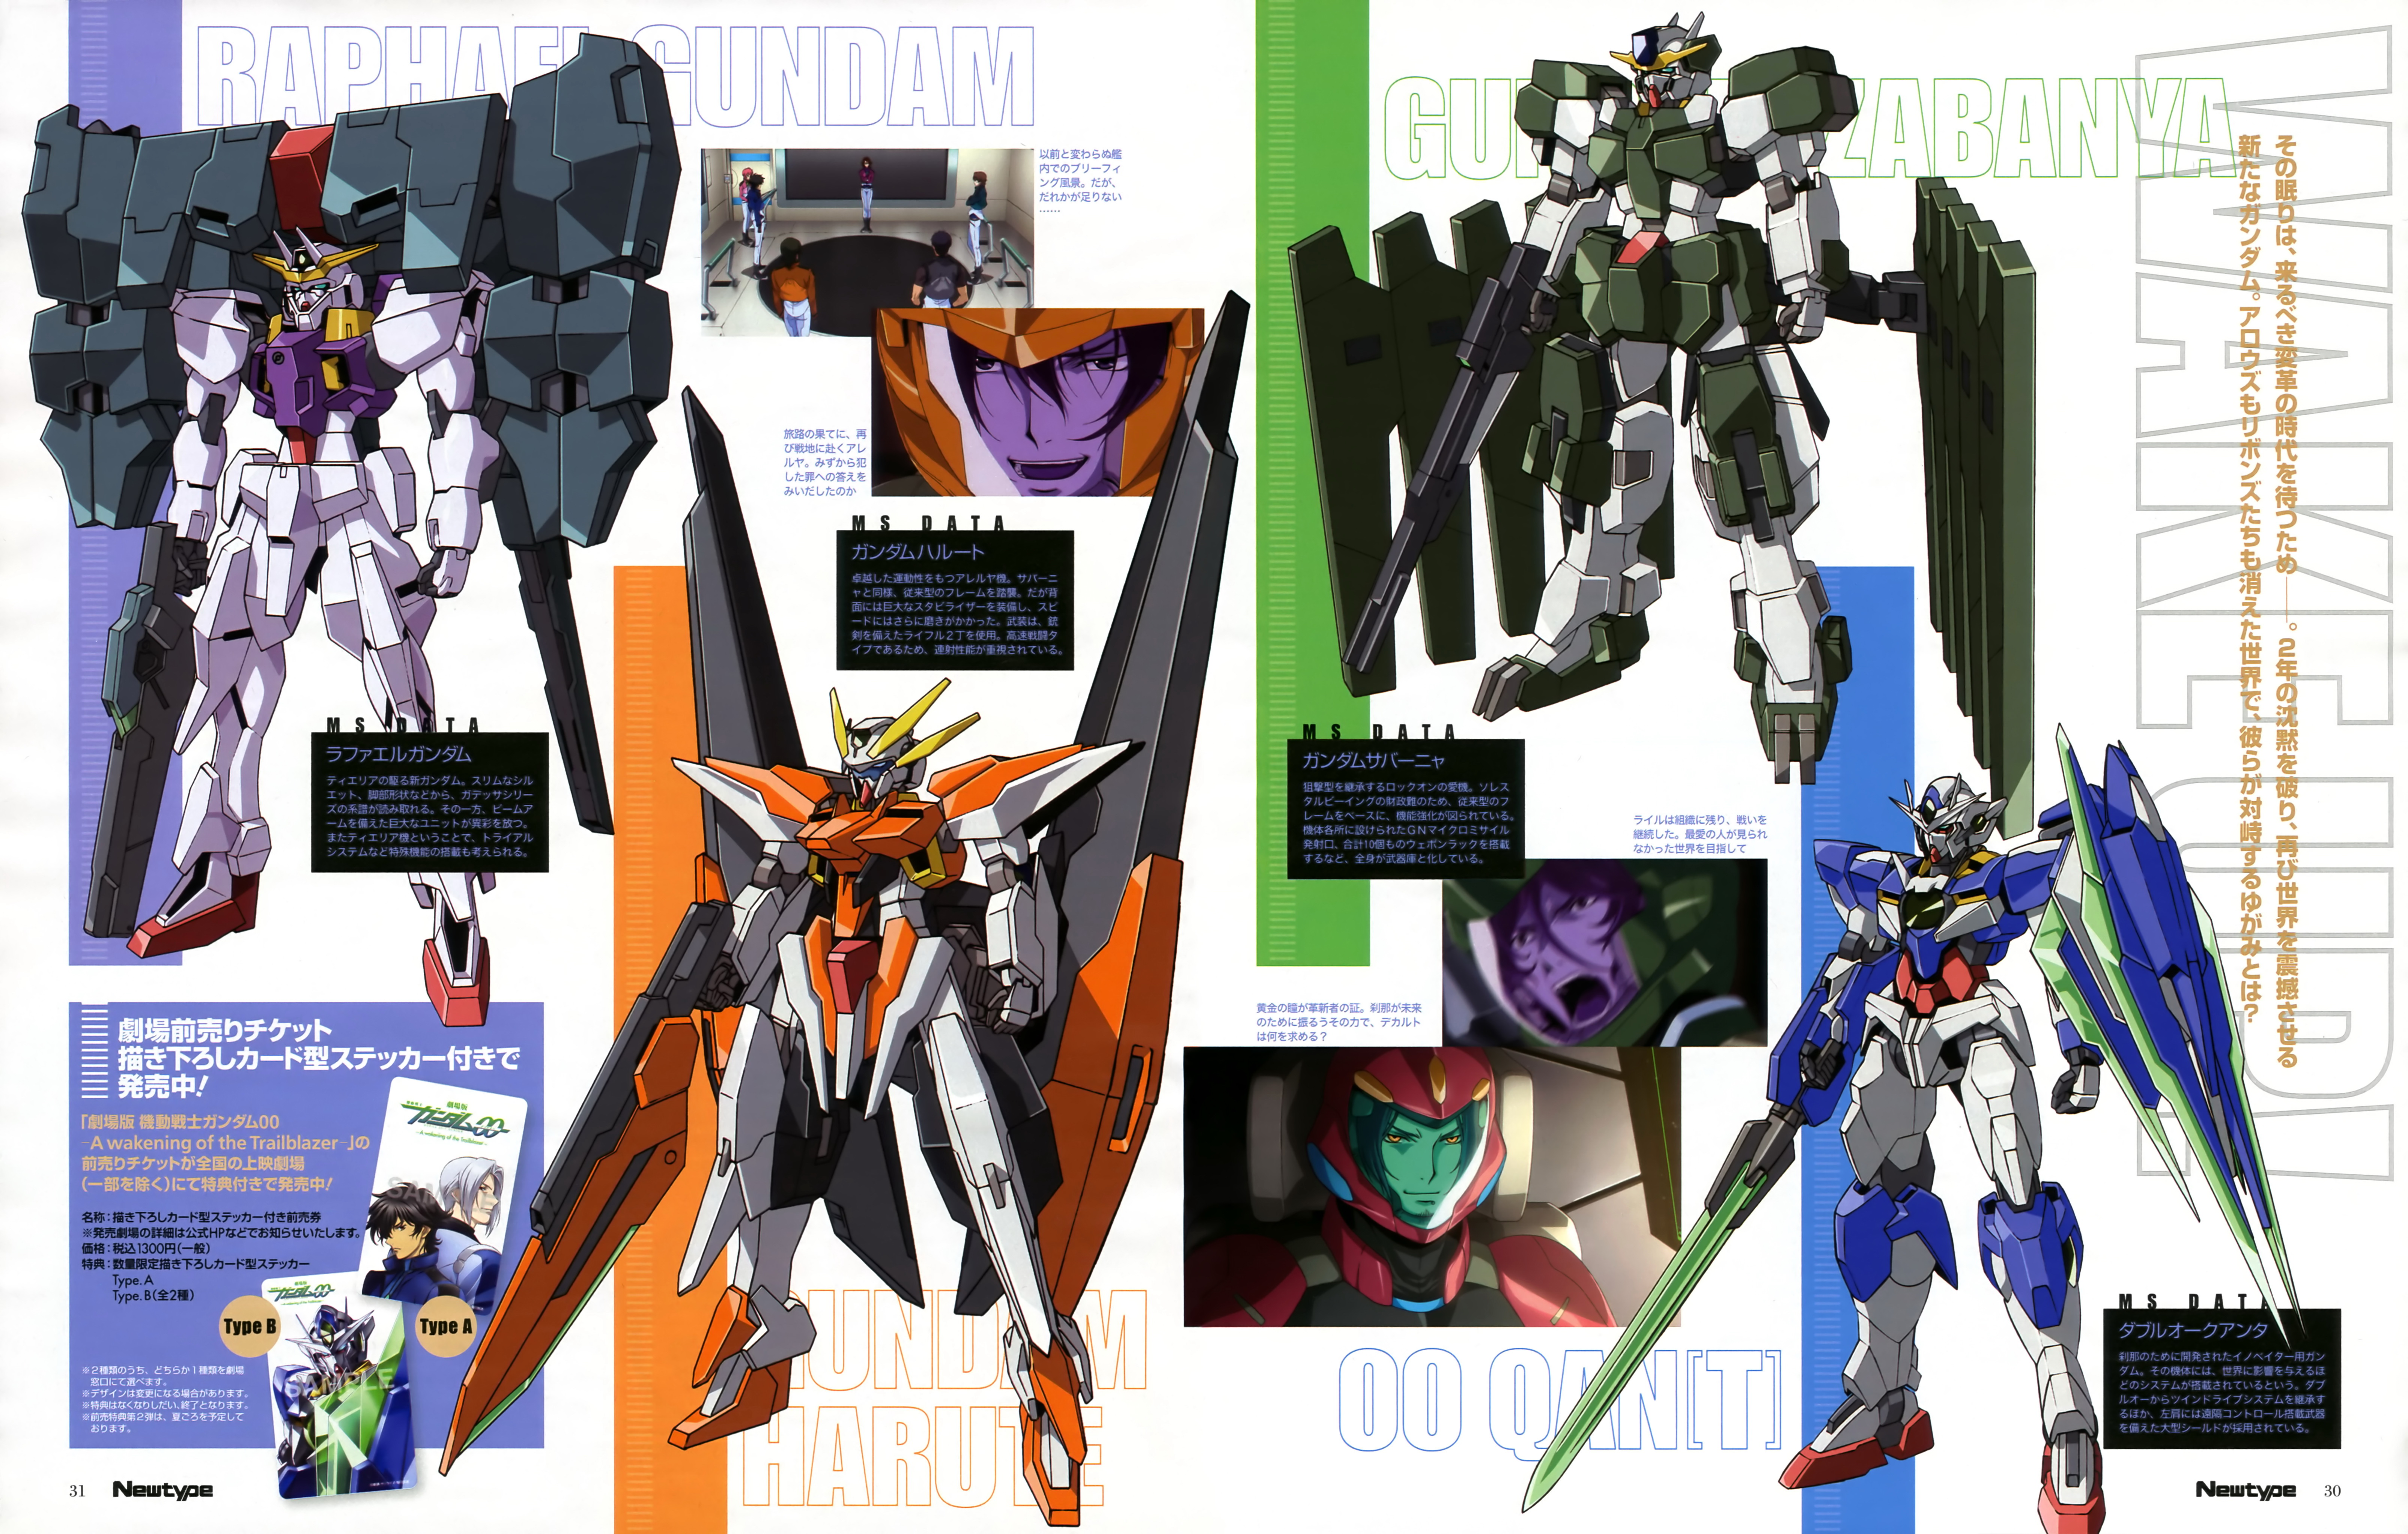 Mobile Suit Gundam 00 HD wallpapers, Desktop wallpaper - most viewed